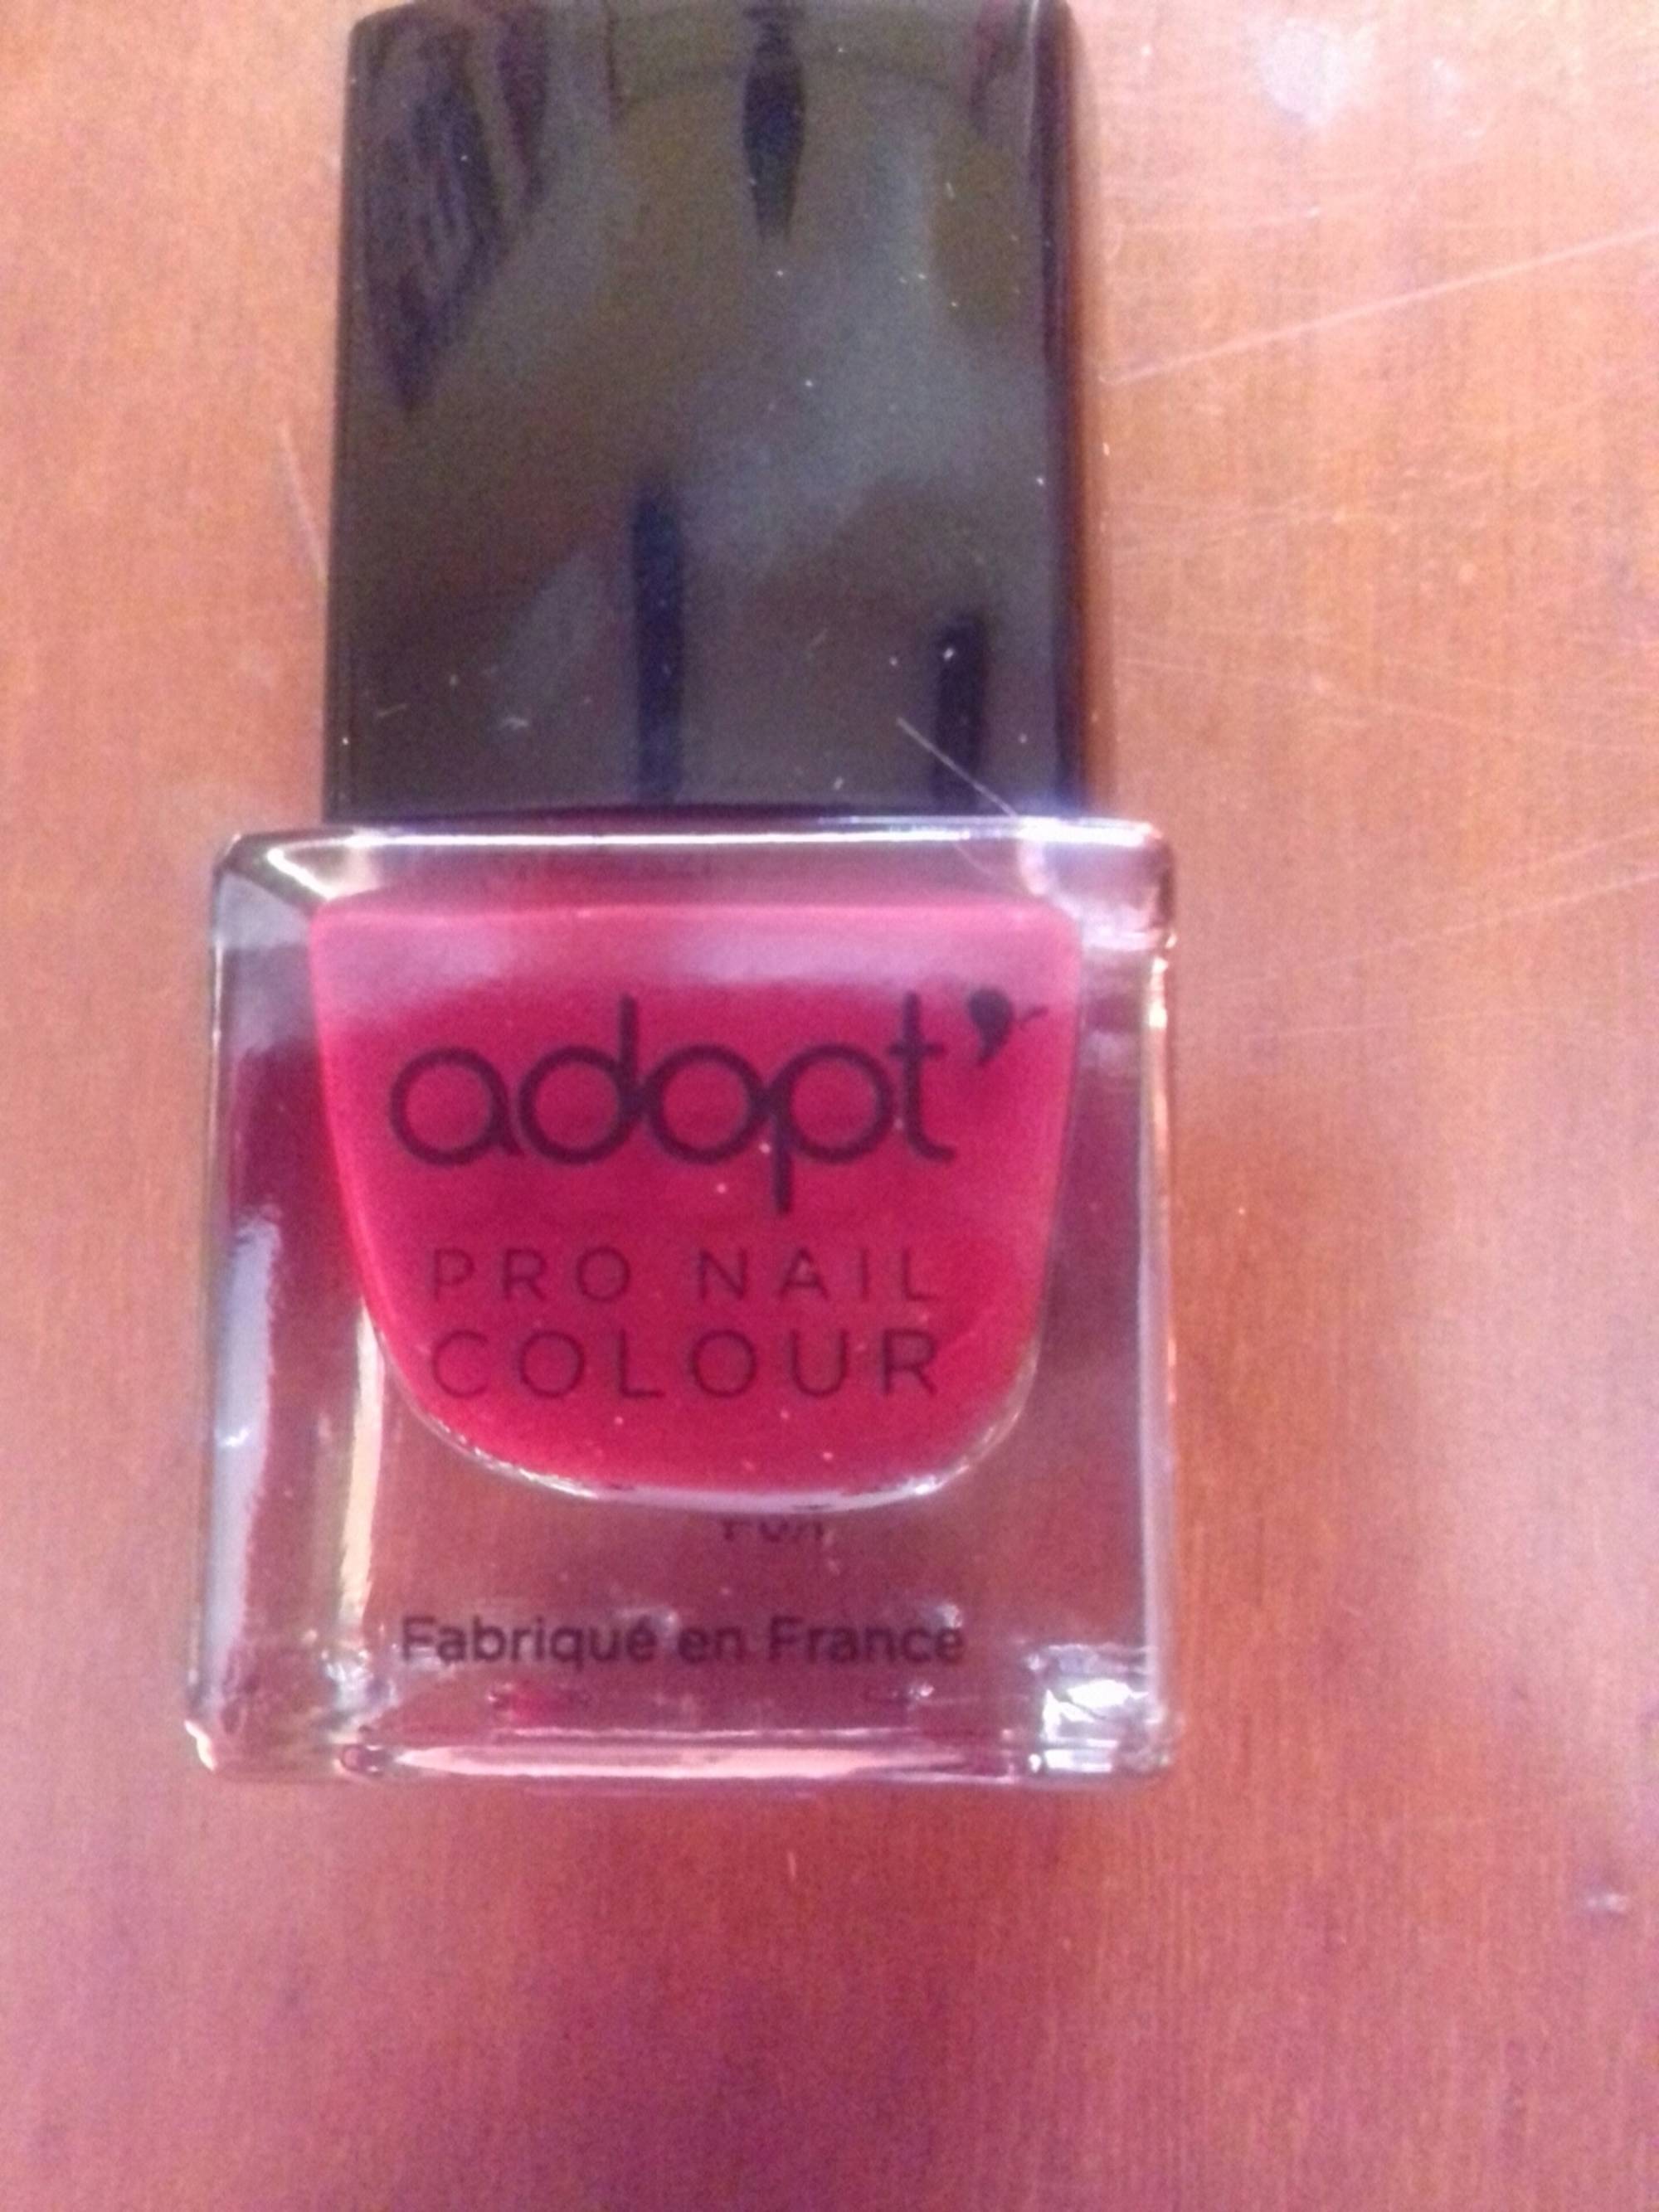 ADOPT' - Pro nail colour - Vernis à ongles n°13 Sabine